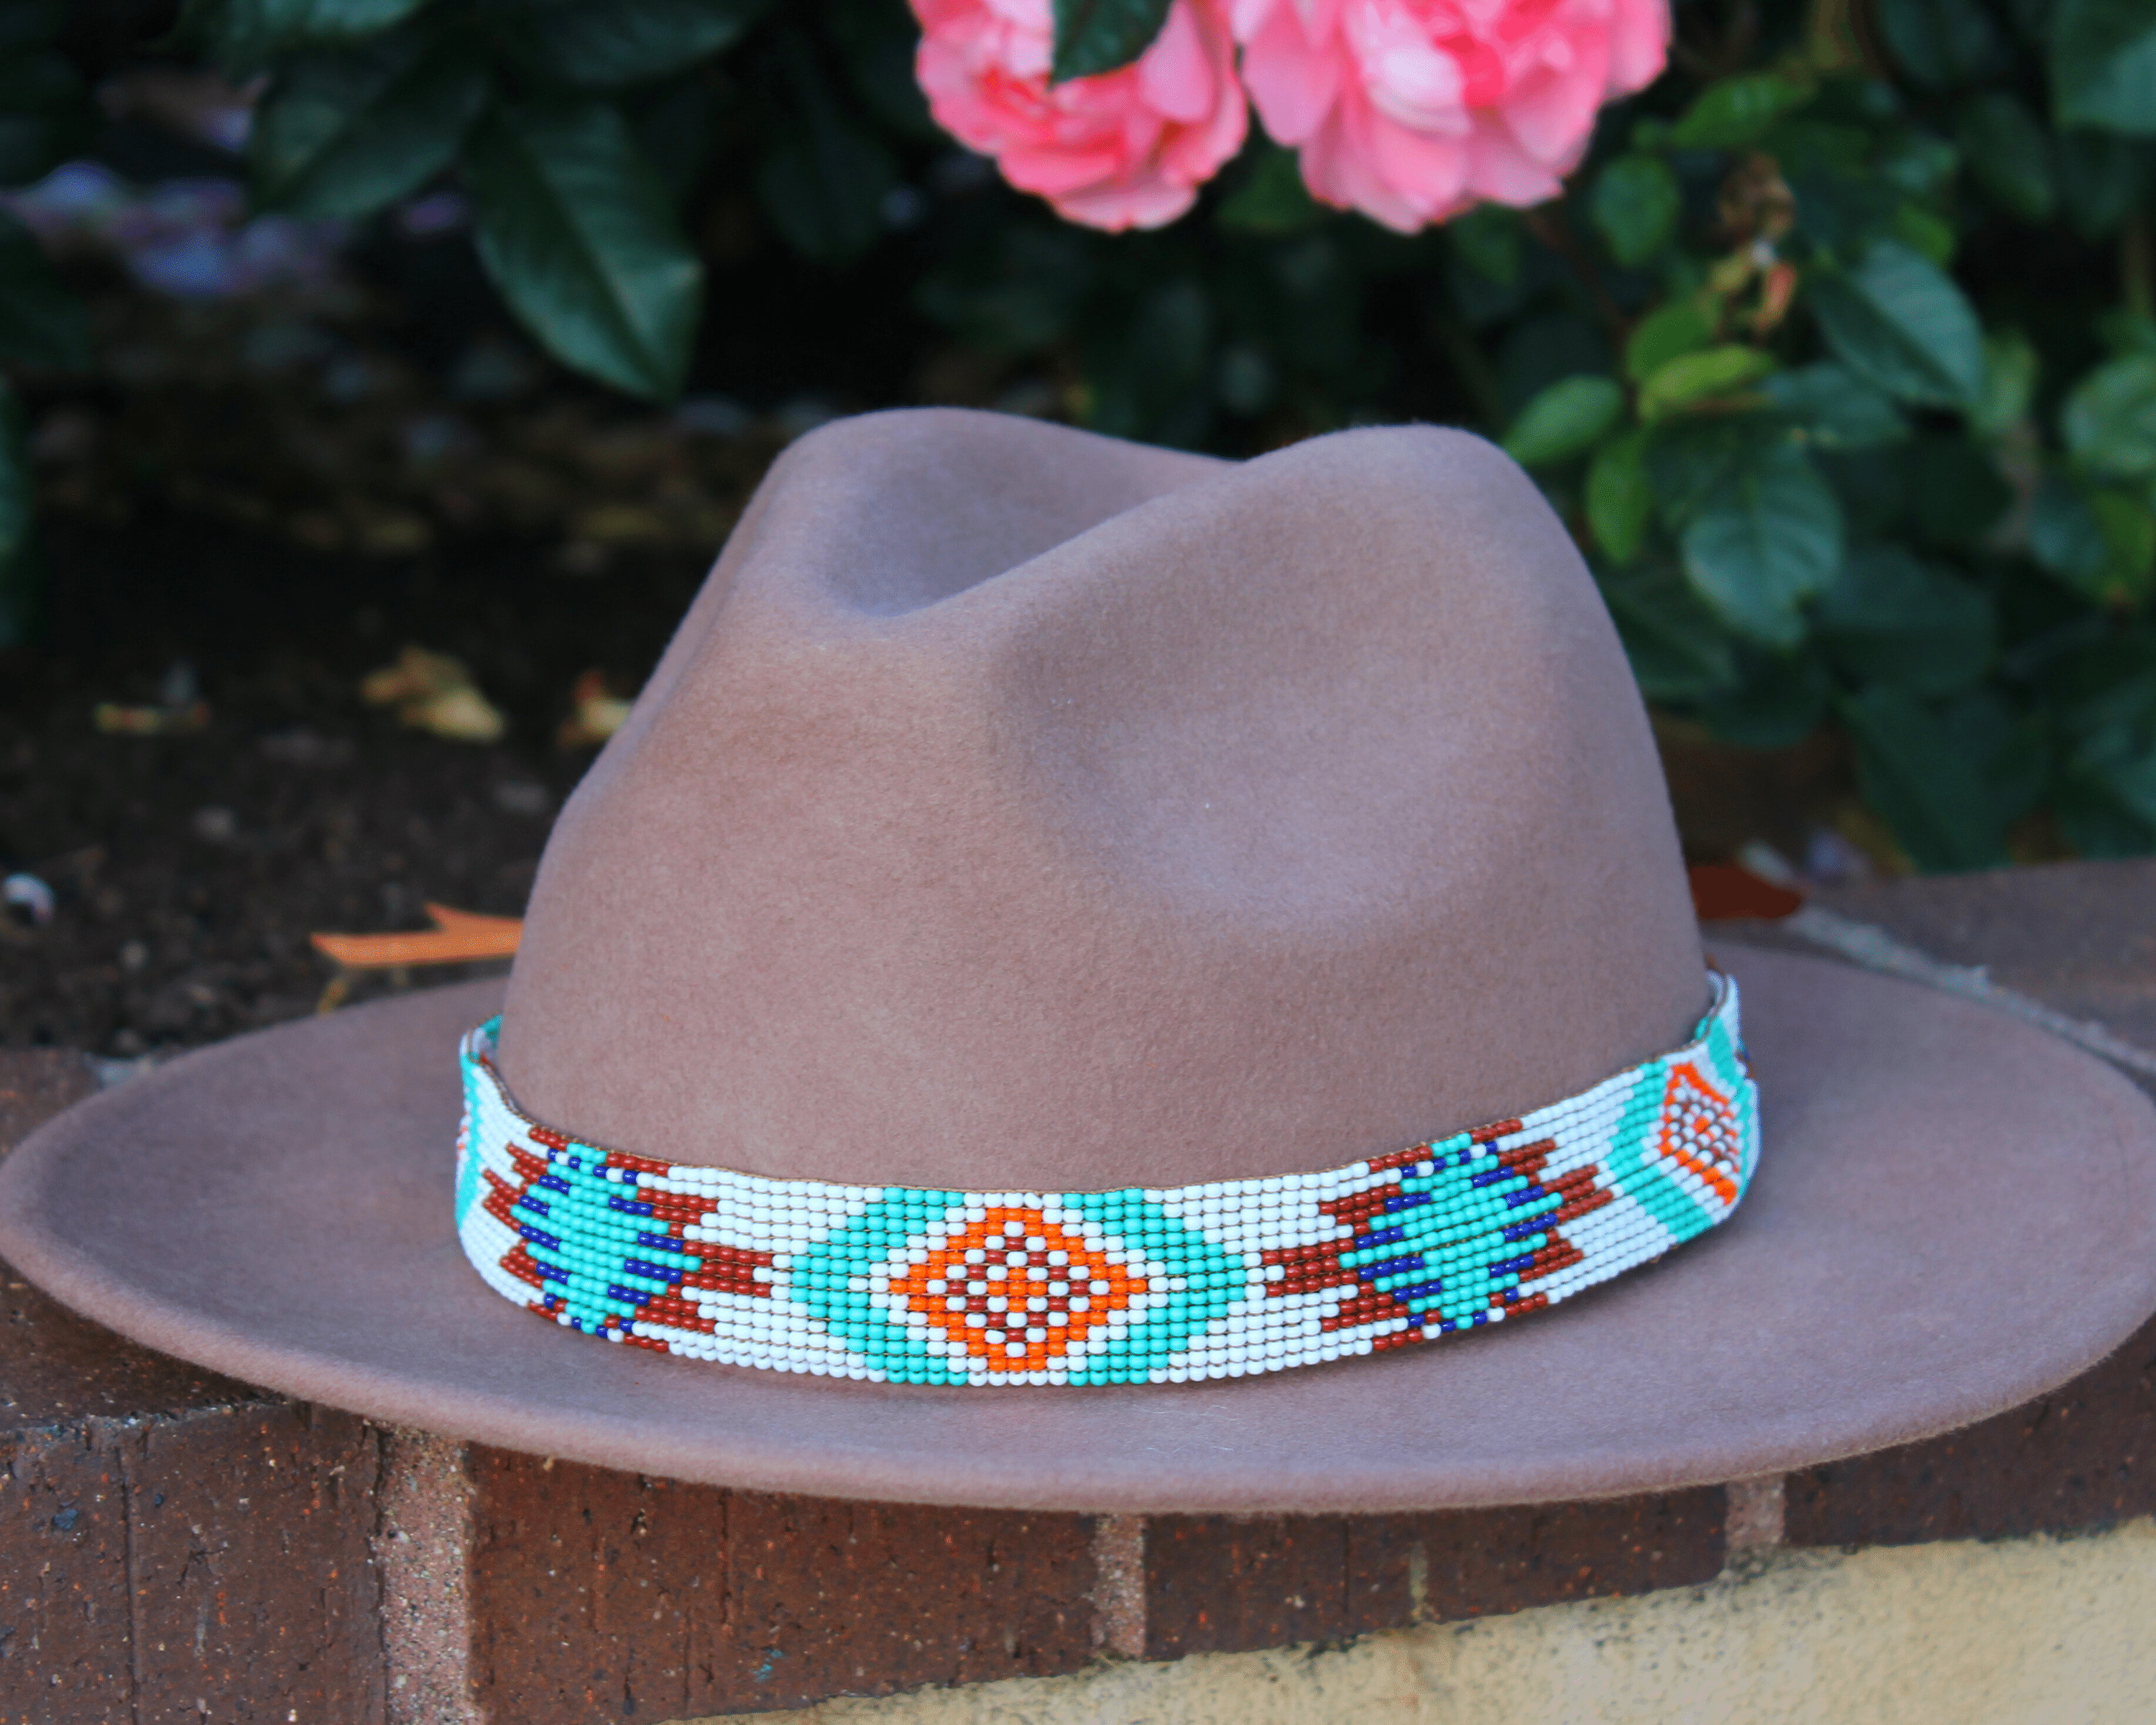 Hat Band, Hatband, Cowboy, Western, Leather, Beaded, Aztec Style, Multi Colors, Handmade in Guatemala 7/8 x 21 (Hatband 25)